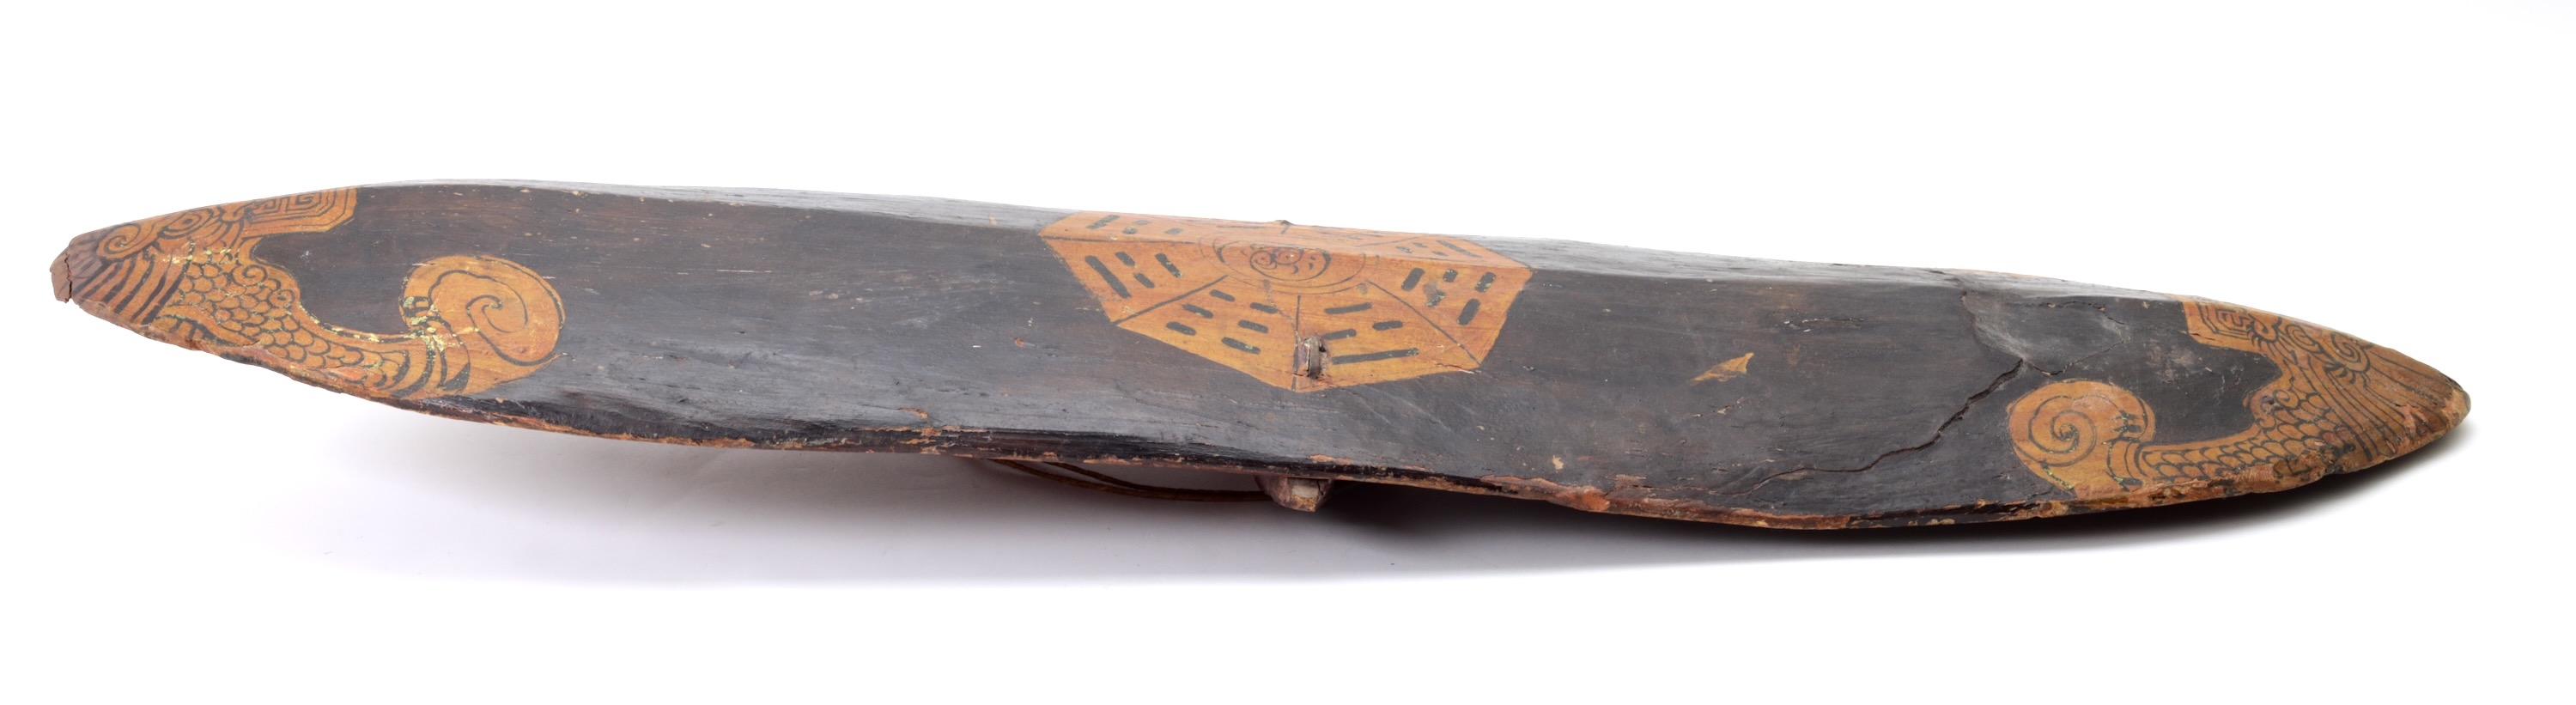 Antique Vietnamese rectangular wooden shield